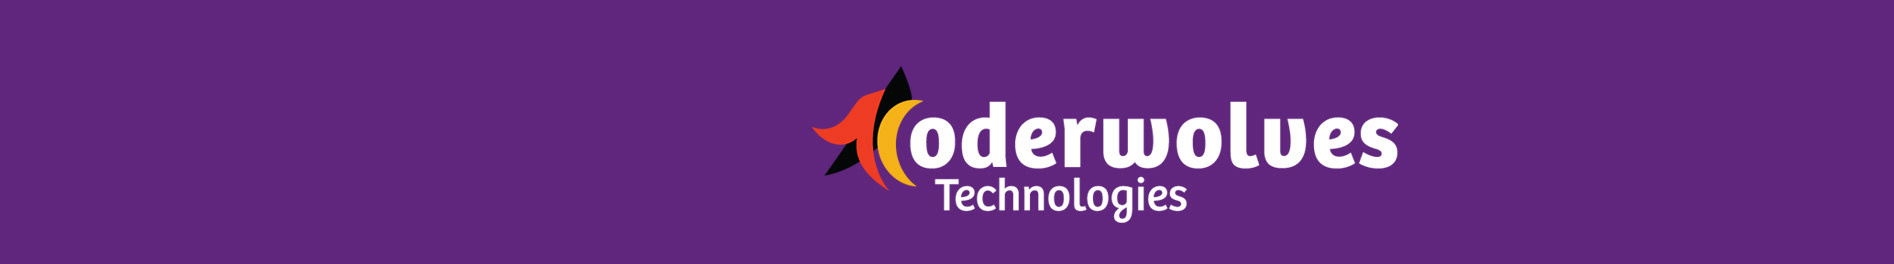 Coderwolves Technologies's profile banner